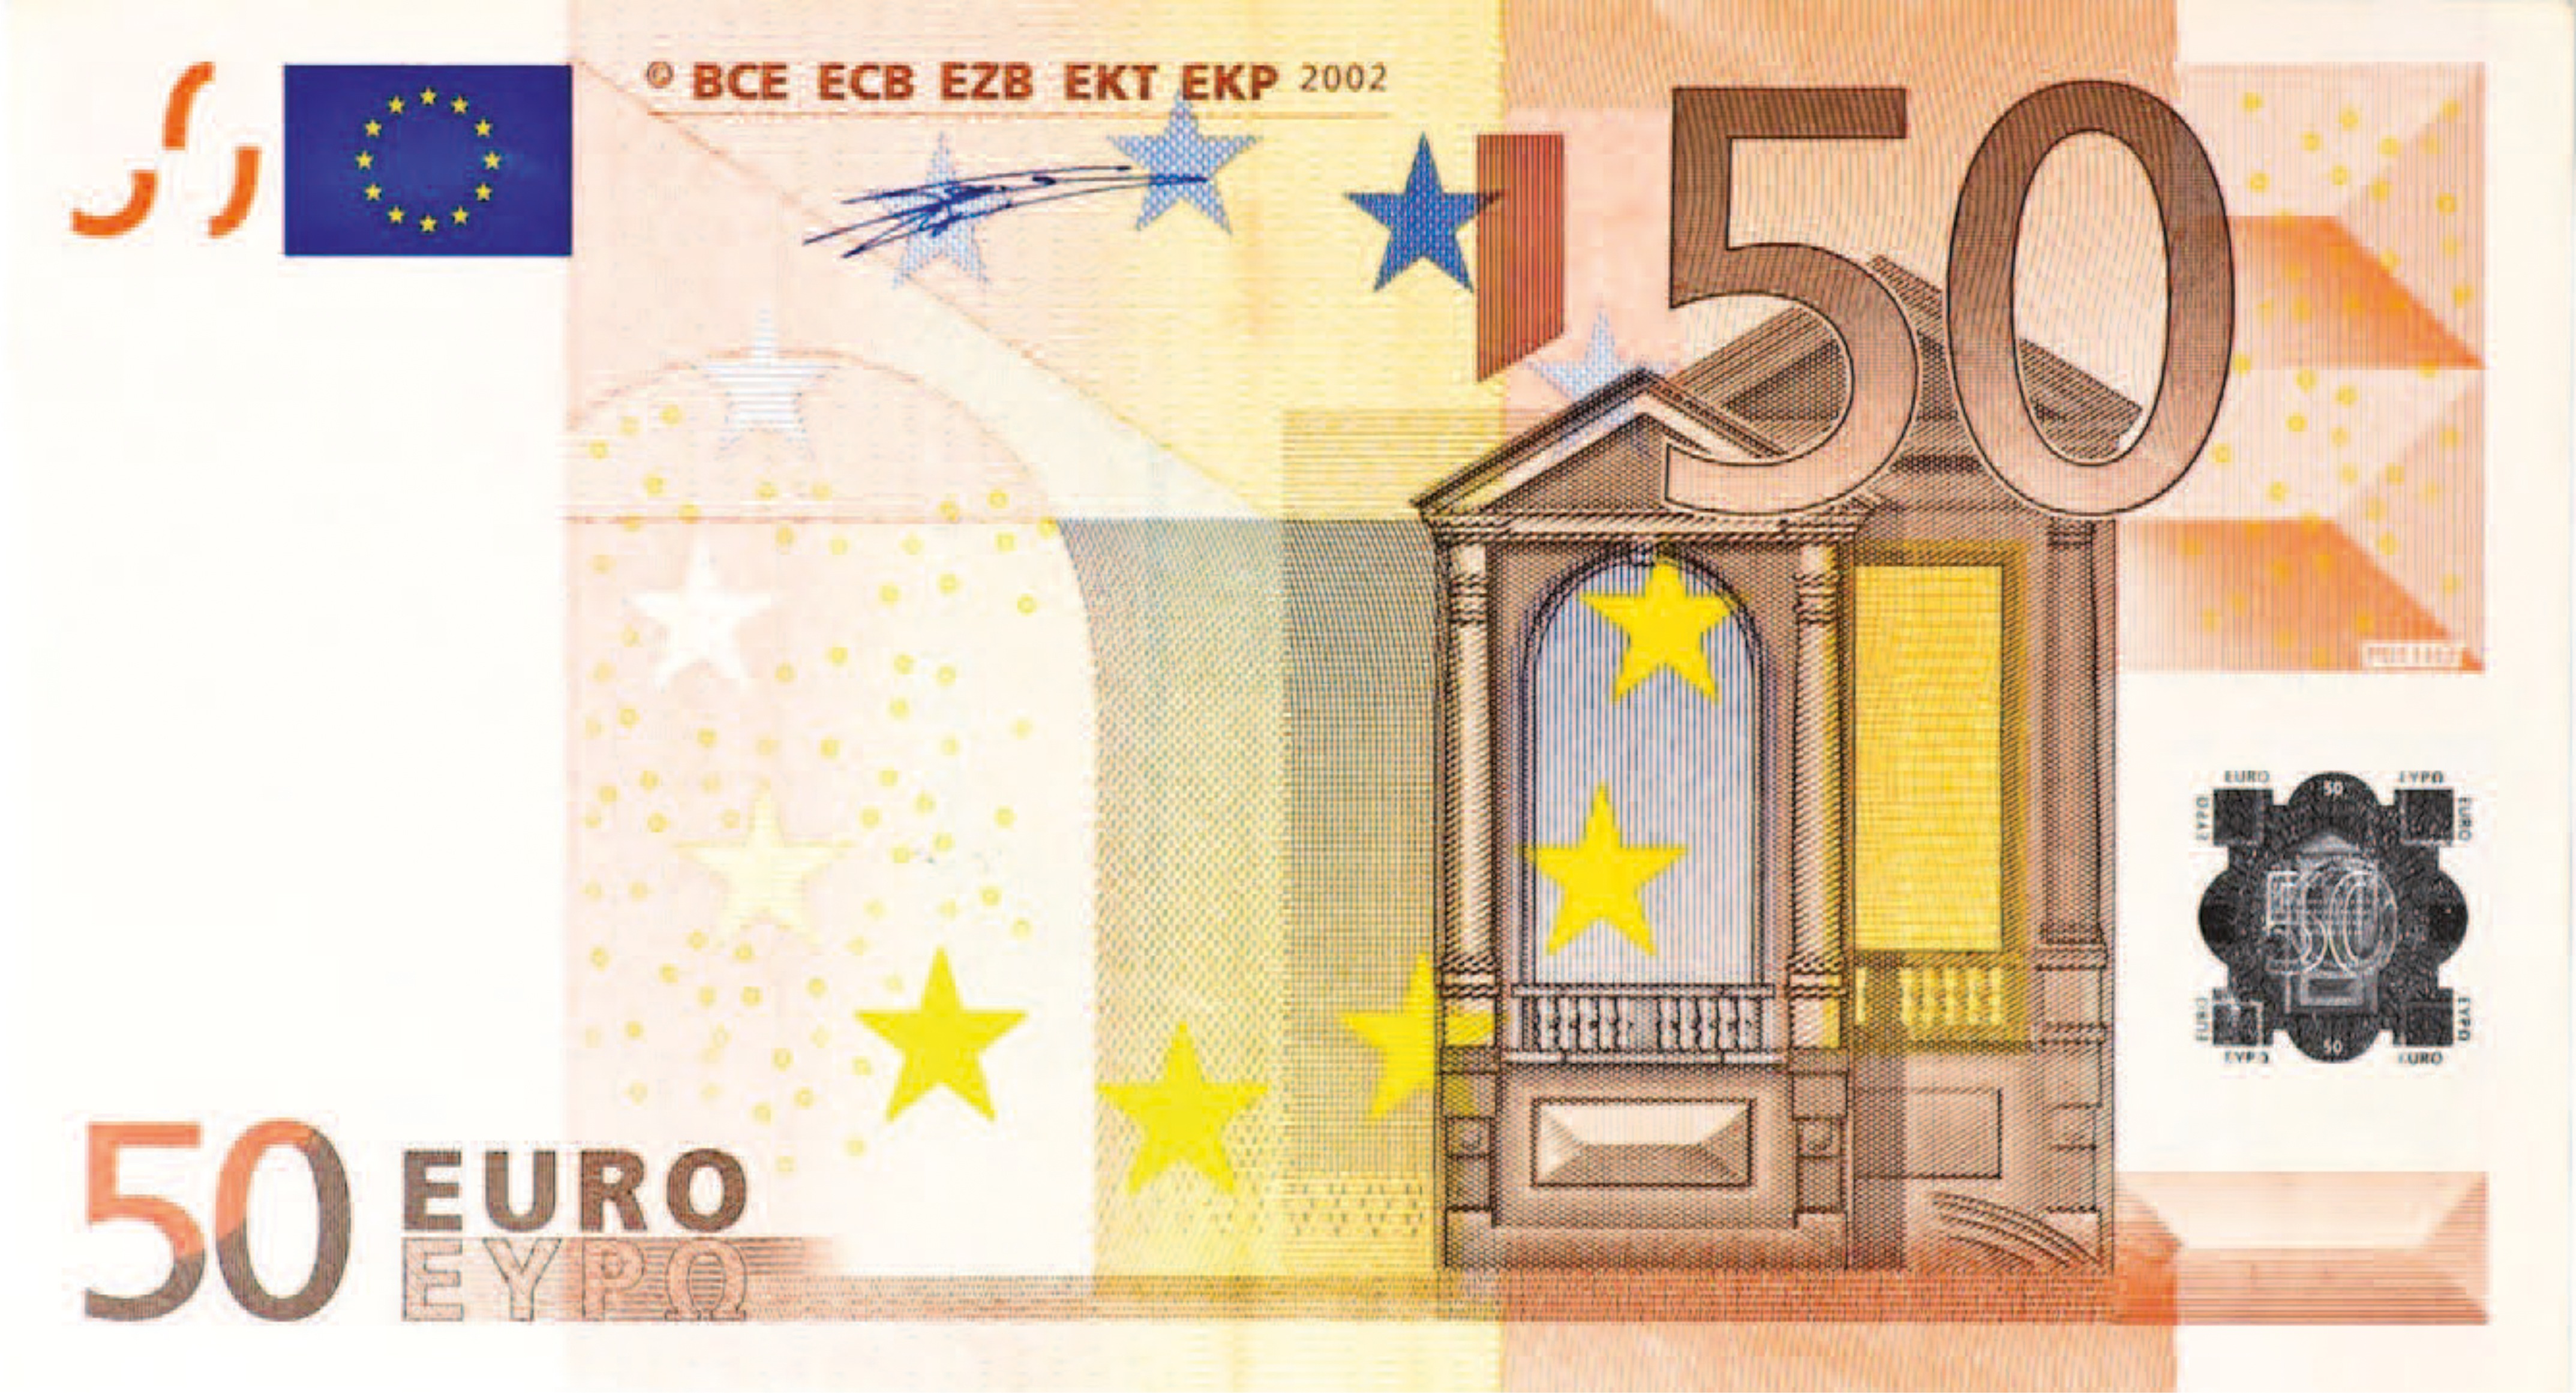 50 euro bill